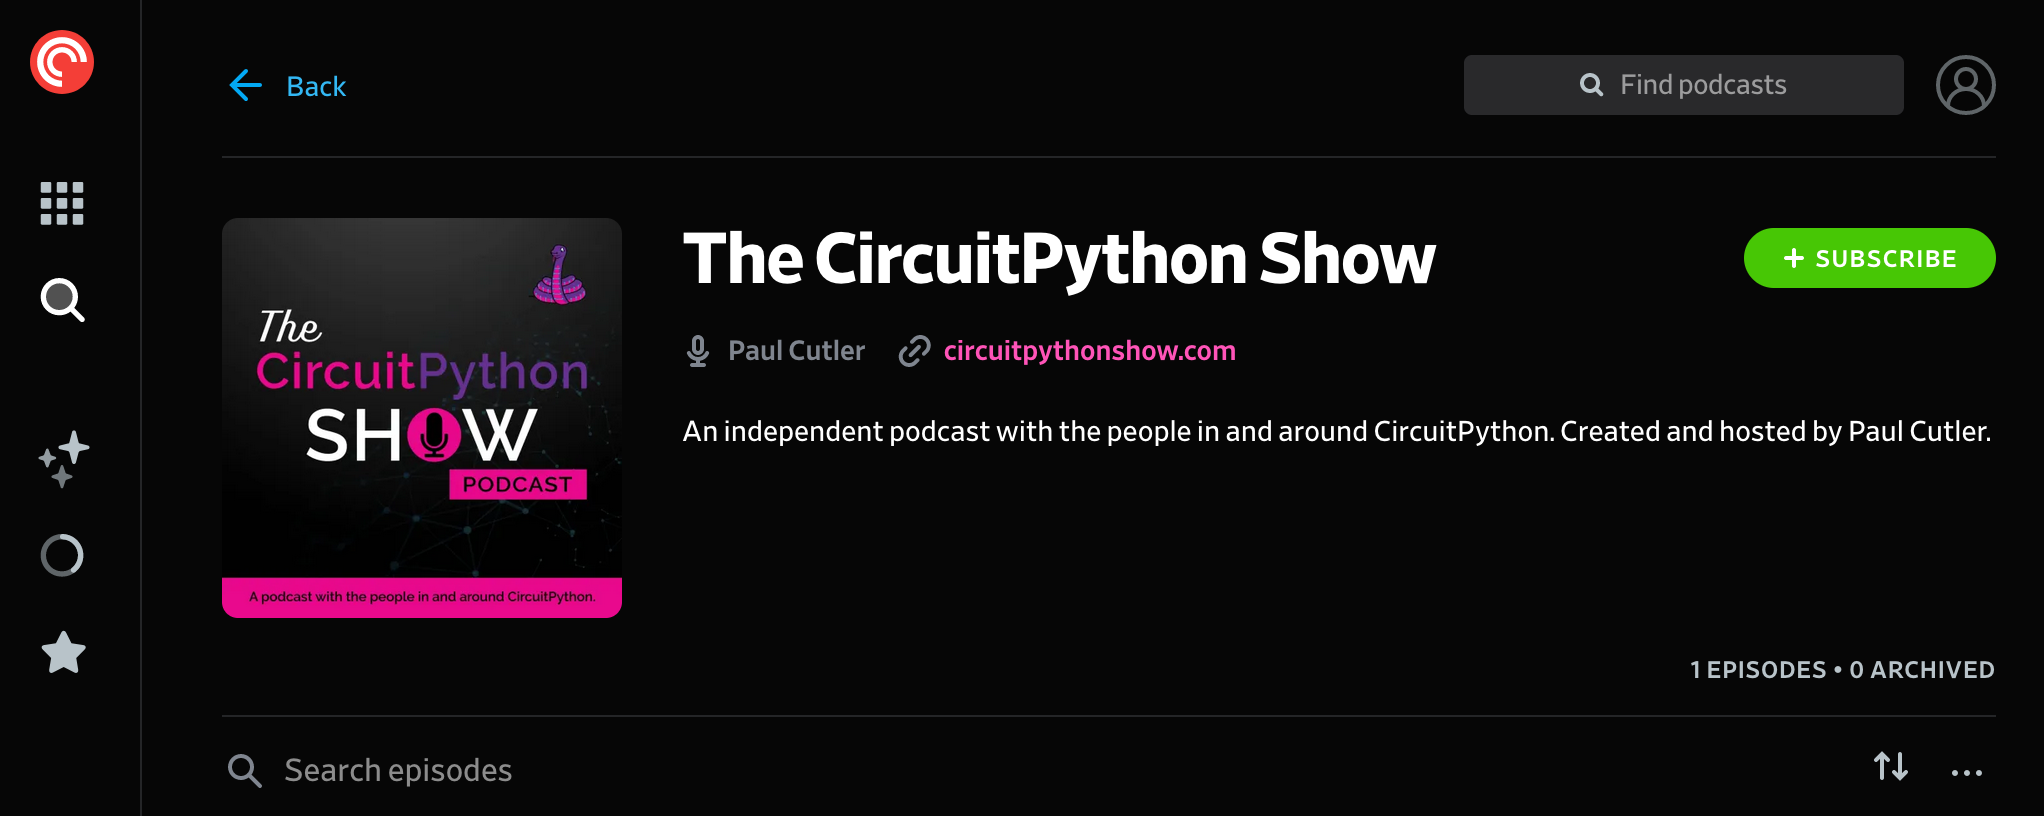 CircuitPython Show on PocketCasts